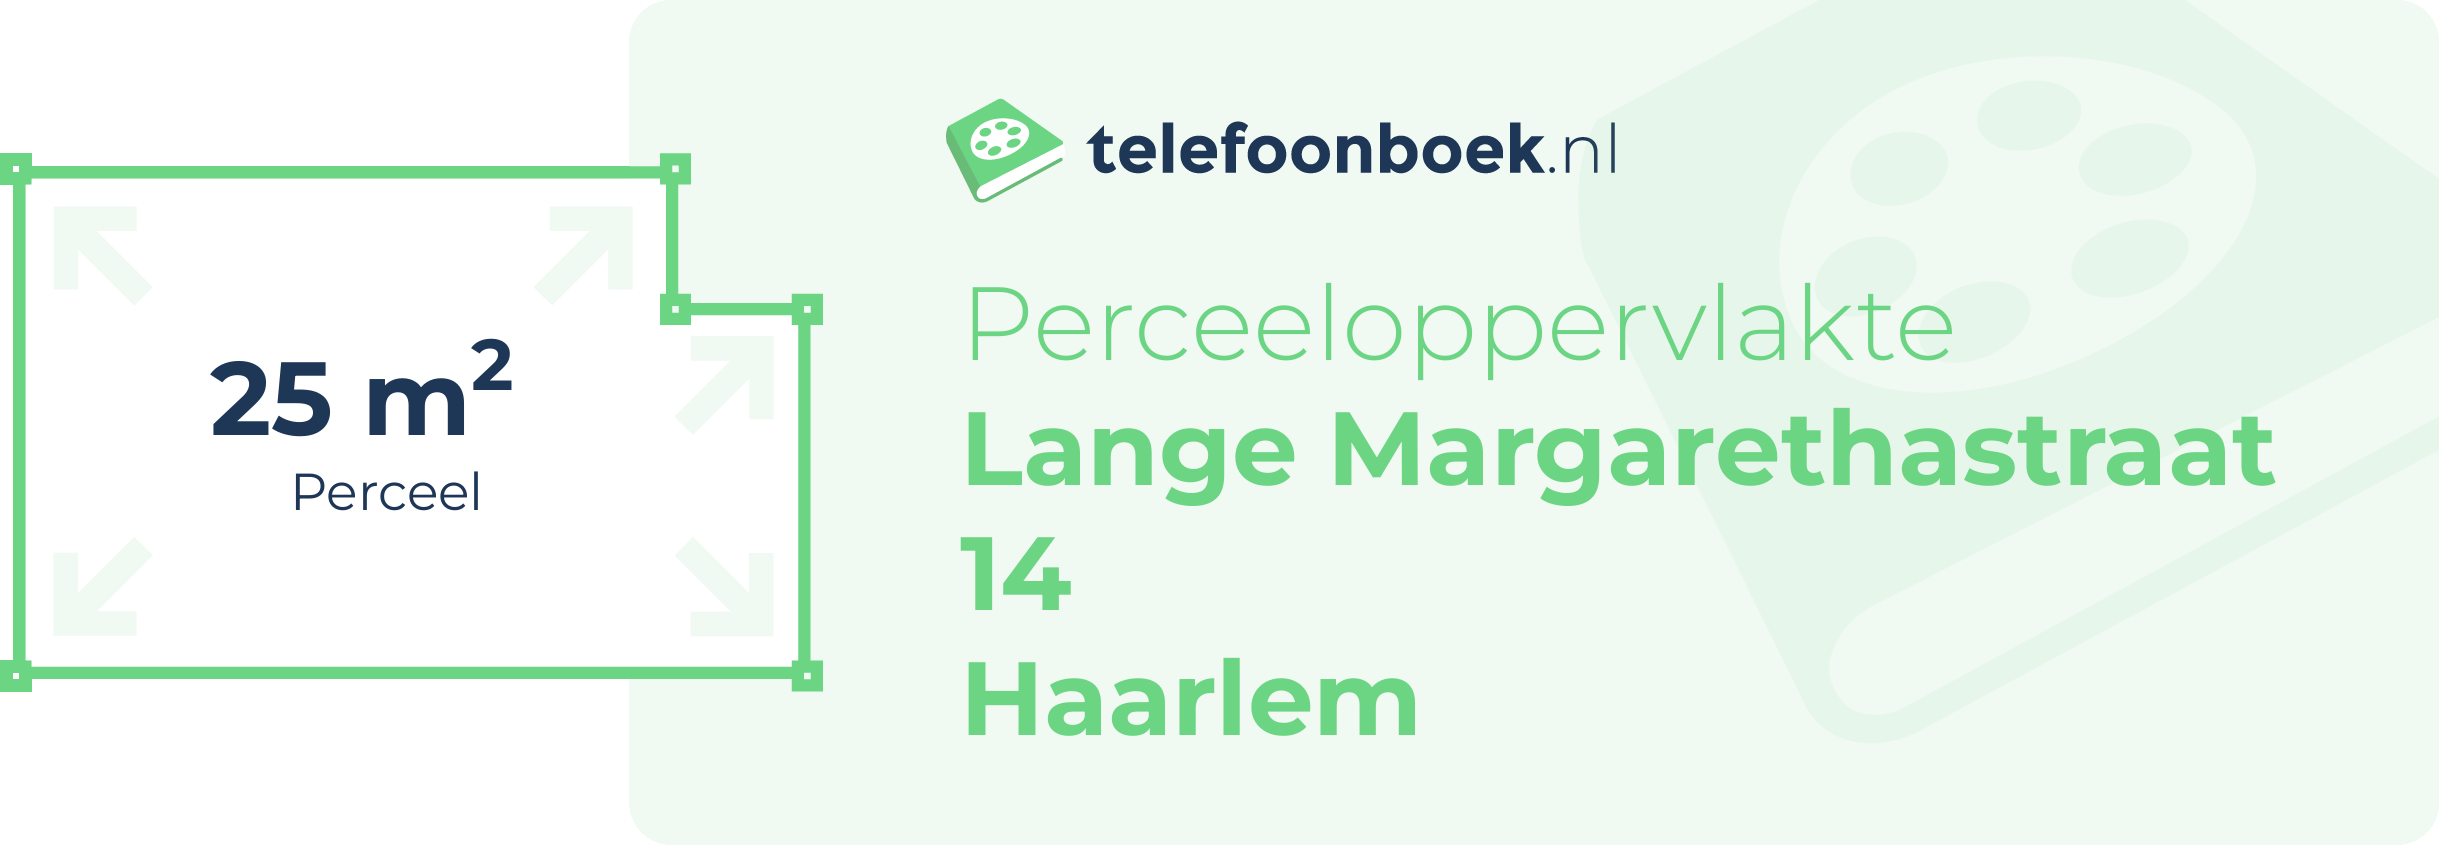 Perceeloppervlakte Lange Margarethastraat 14 Haarlem